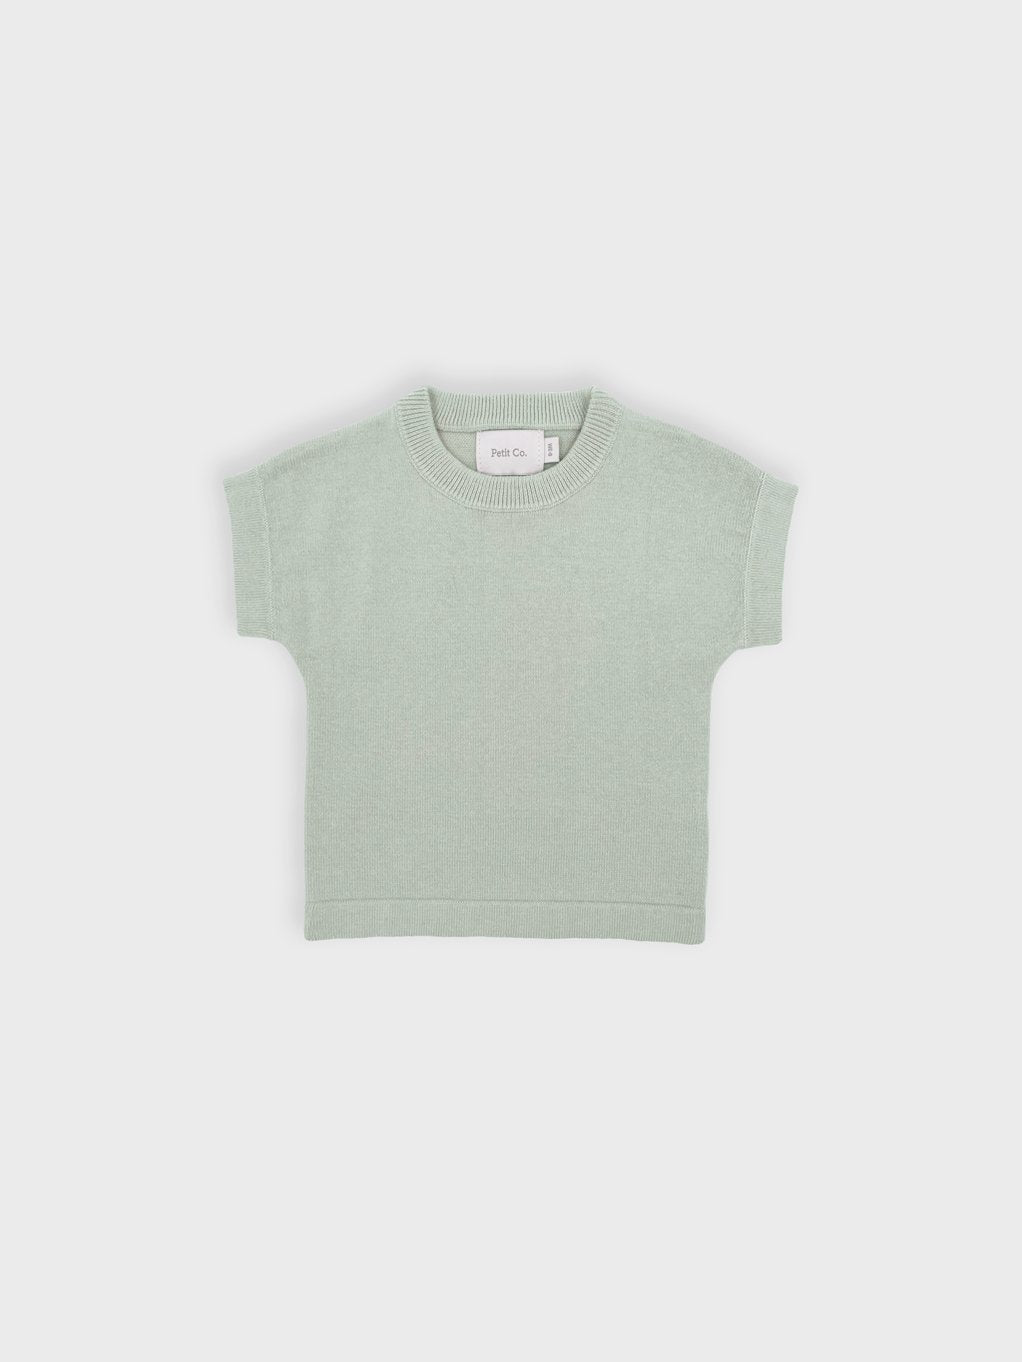 100% cotton knit t-shirt